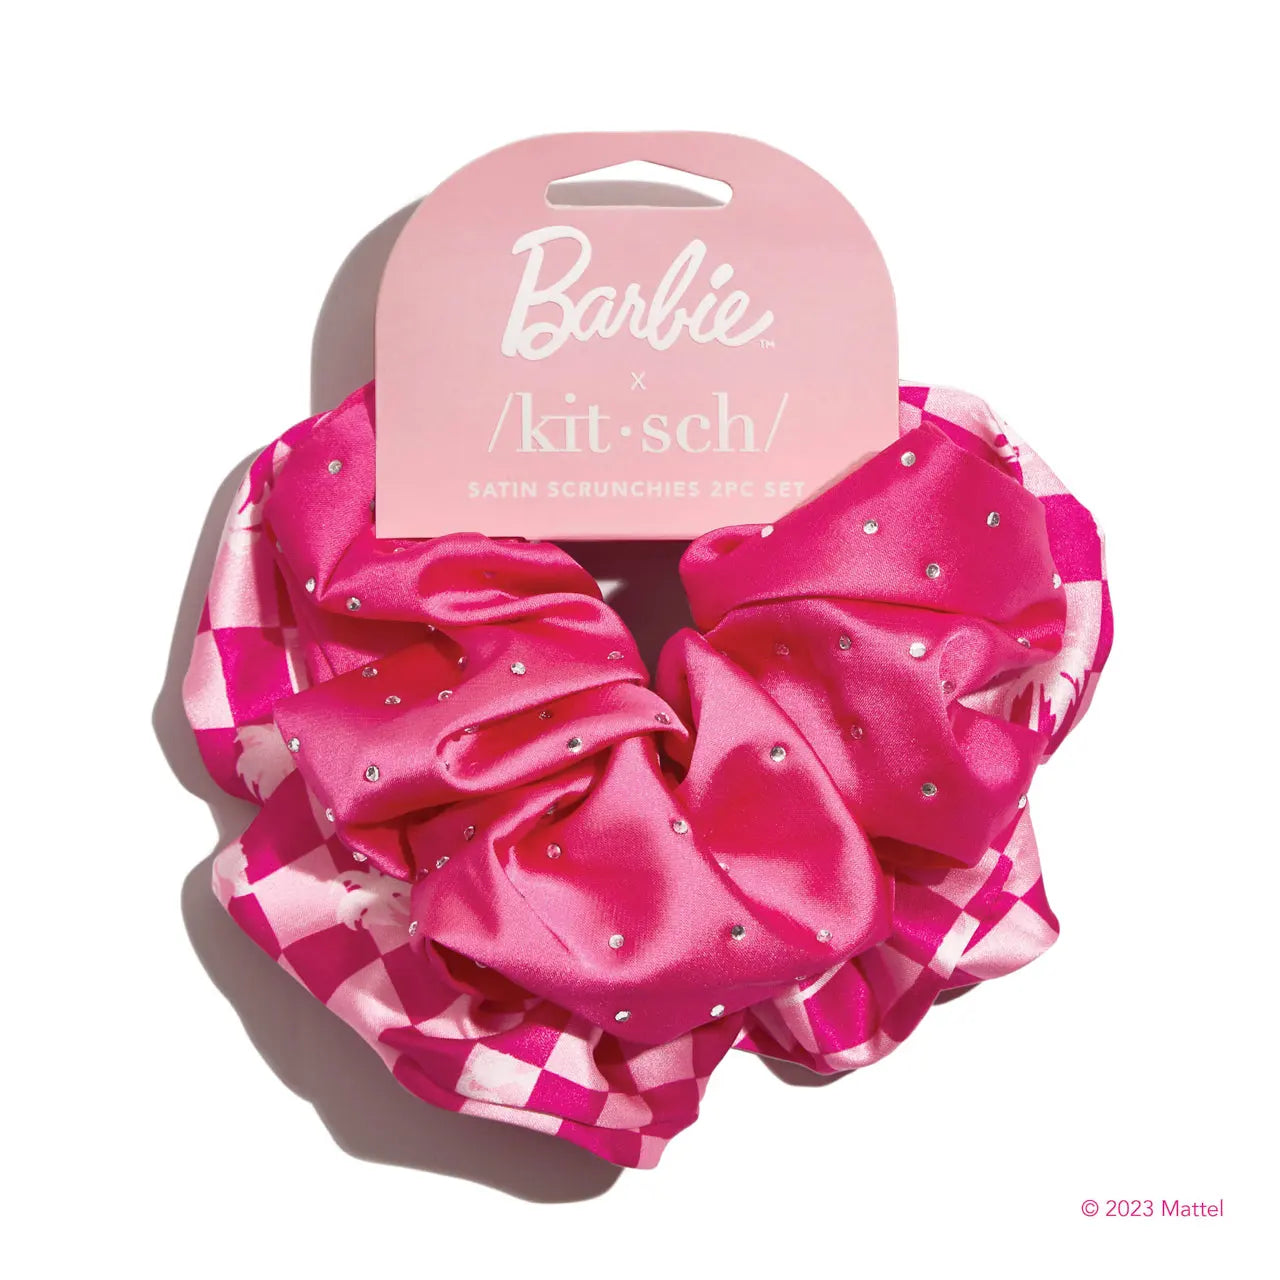 Kitsch - Barbie Satin Scrunchies 2pc